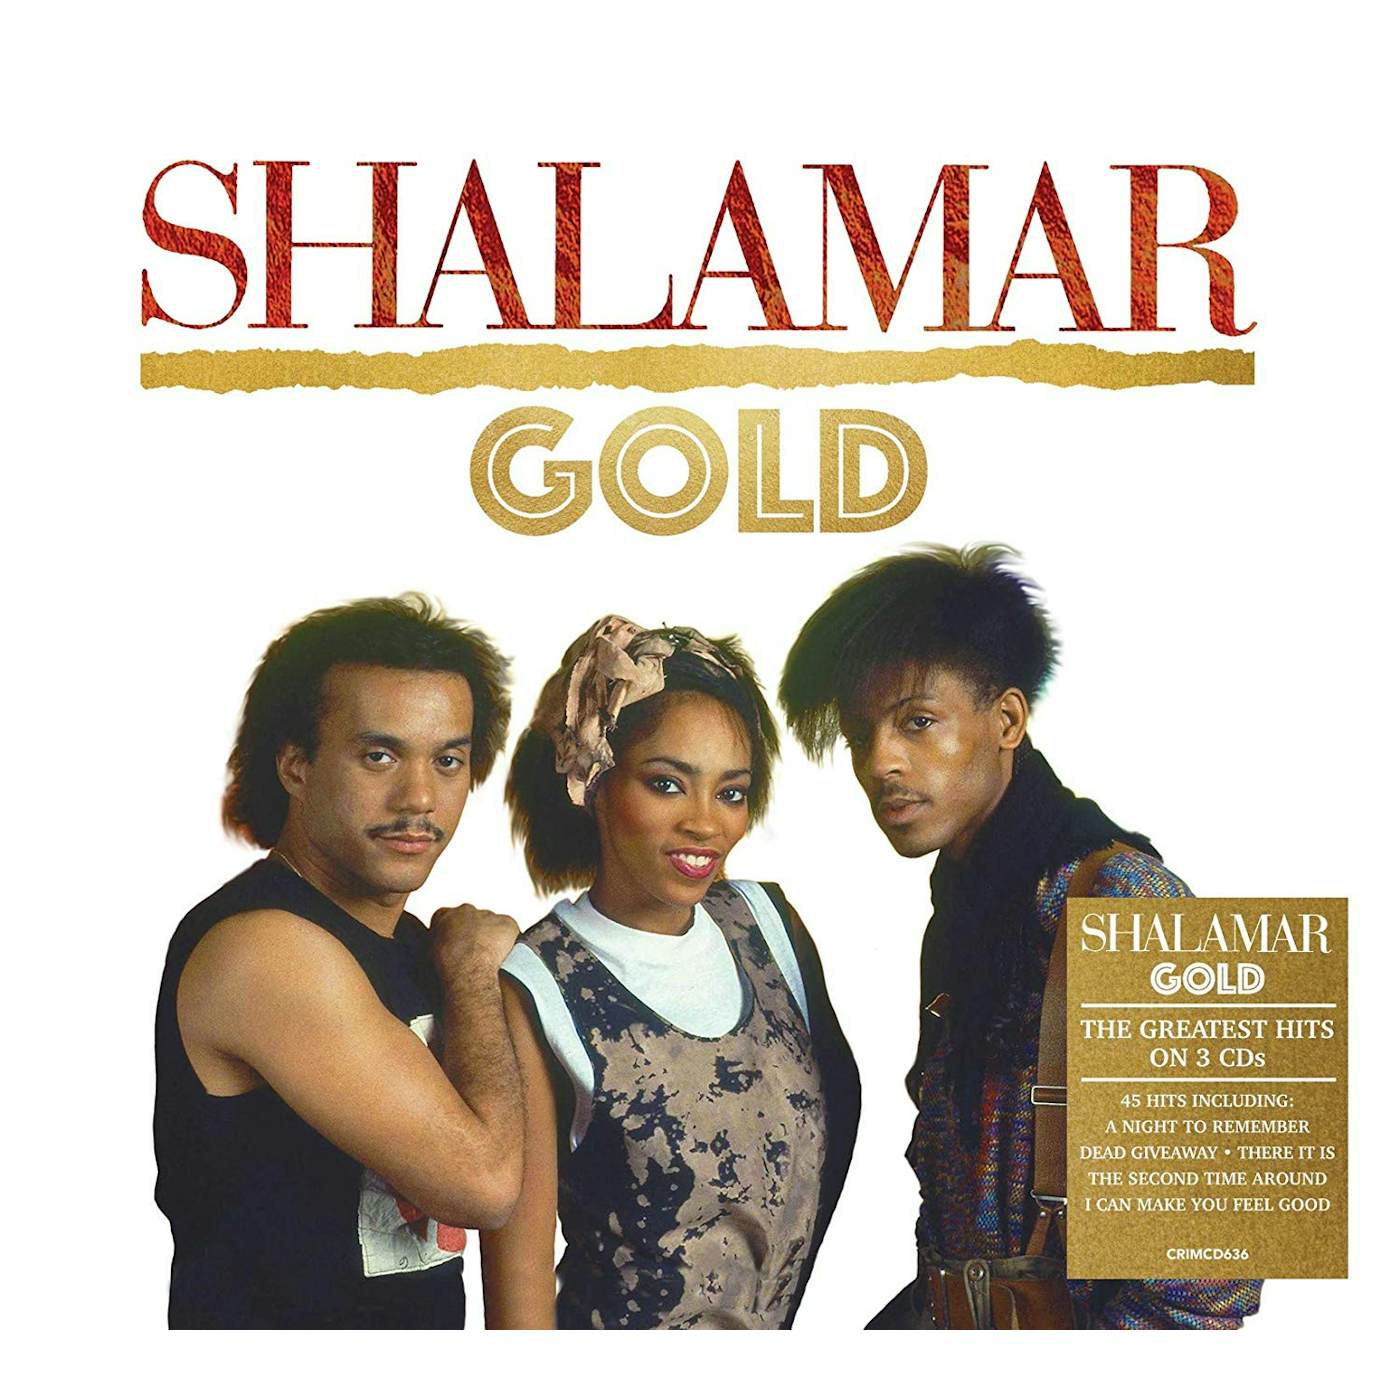 Shalamar GOLD CD